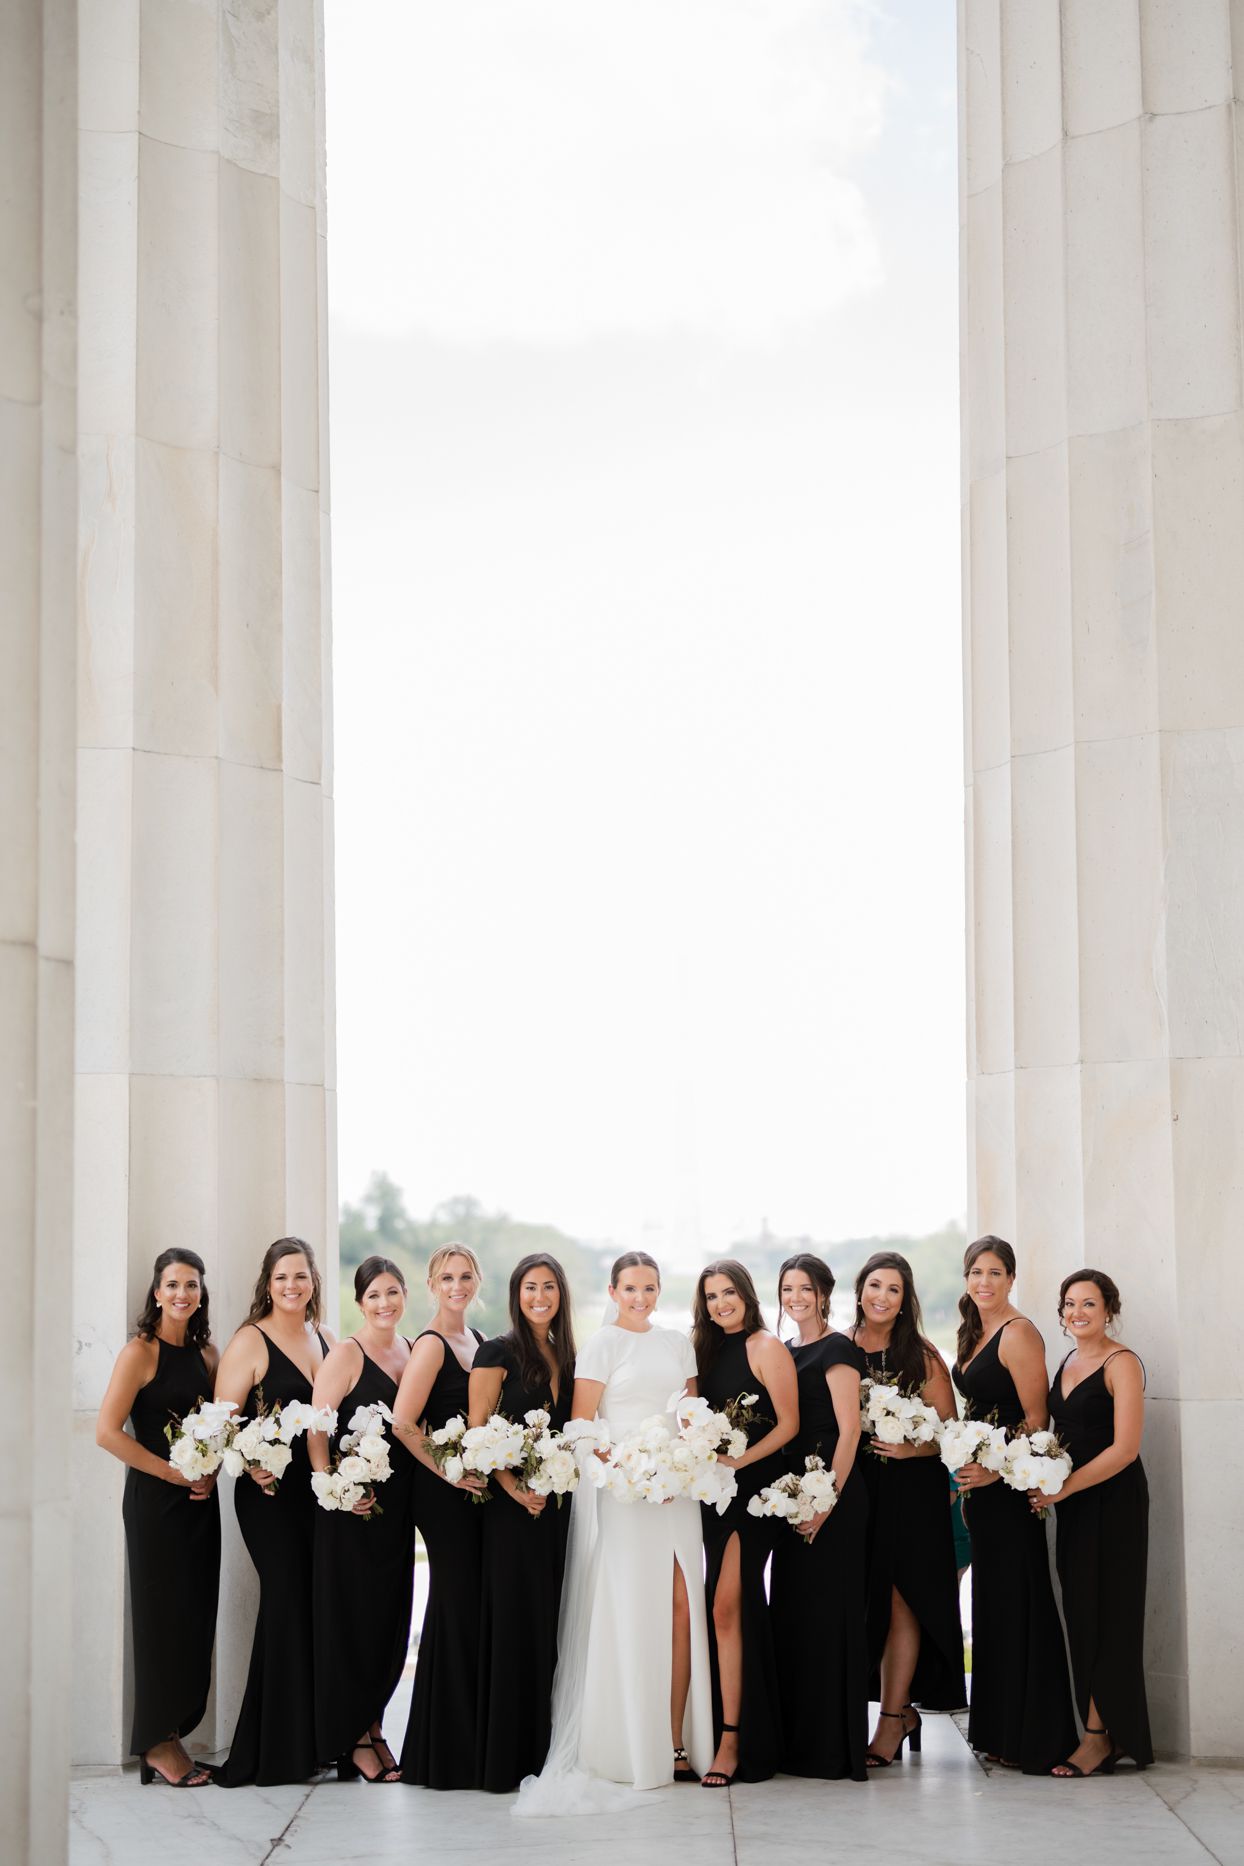 bride with bridesmaids in black dresses